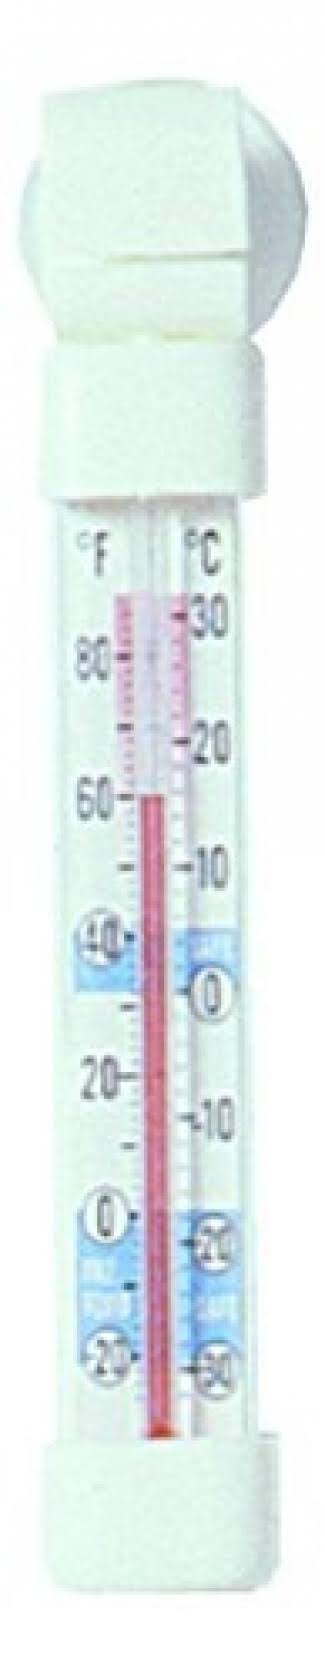 Chef Aid Fridge Freezer Thermometer